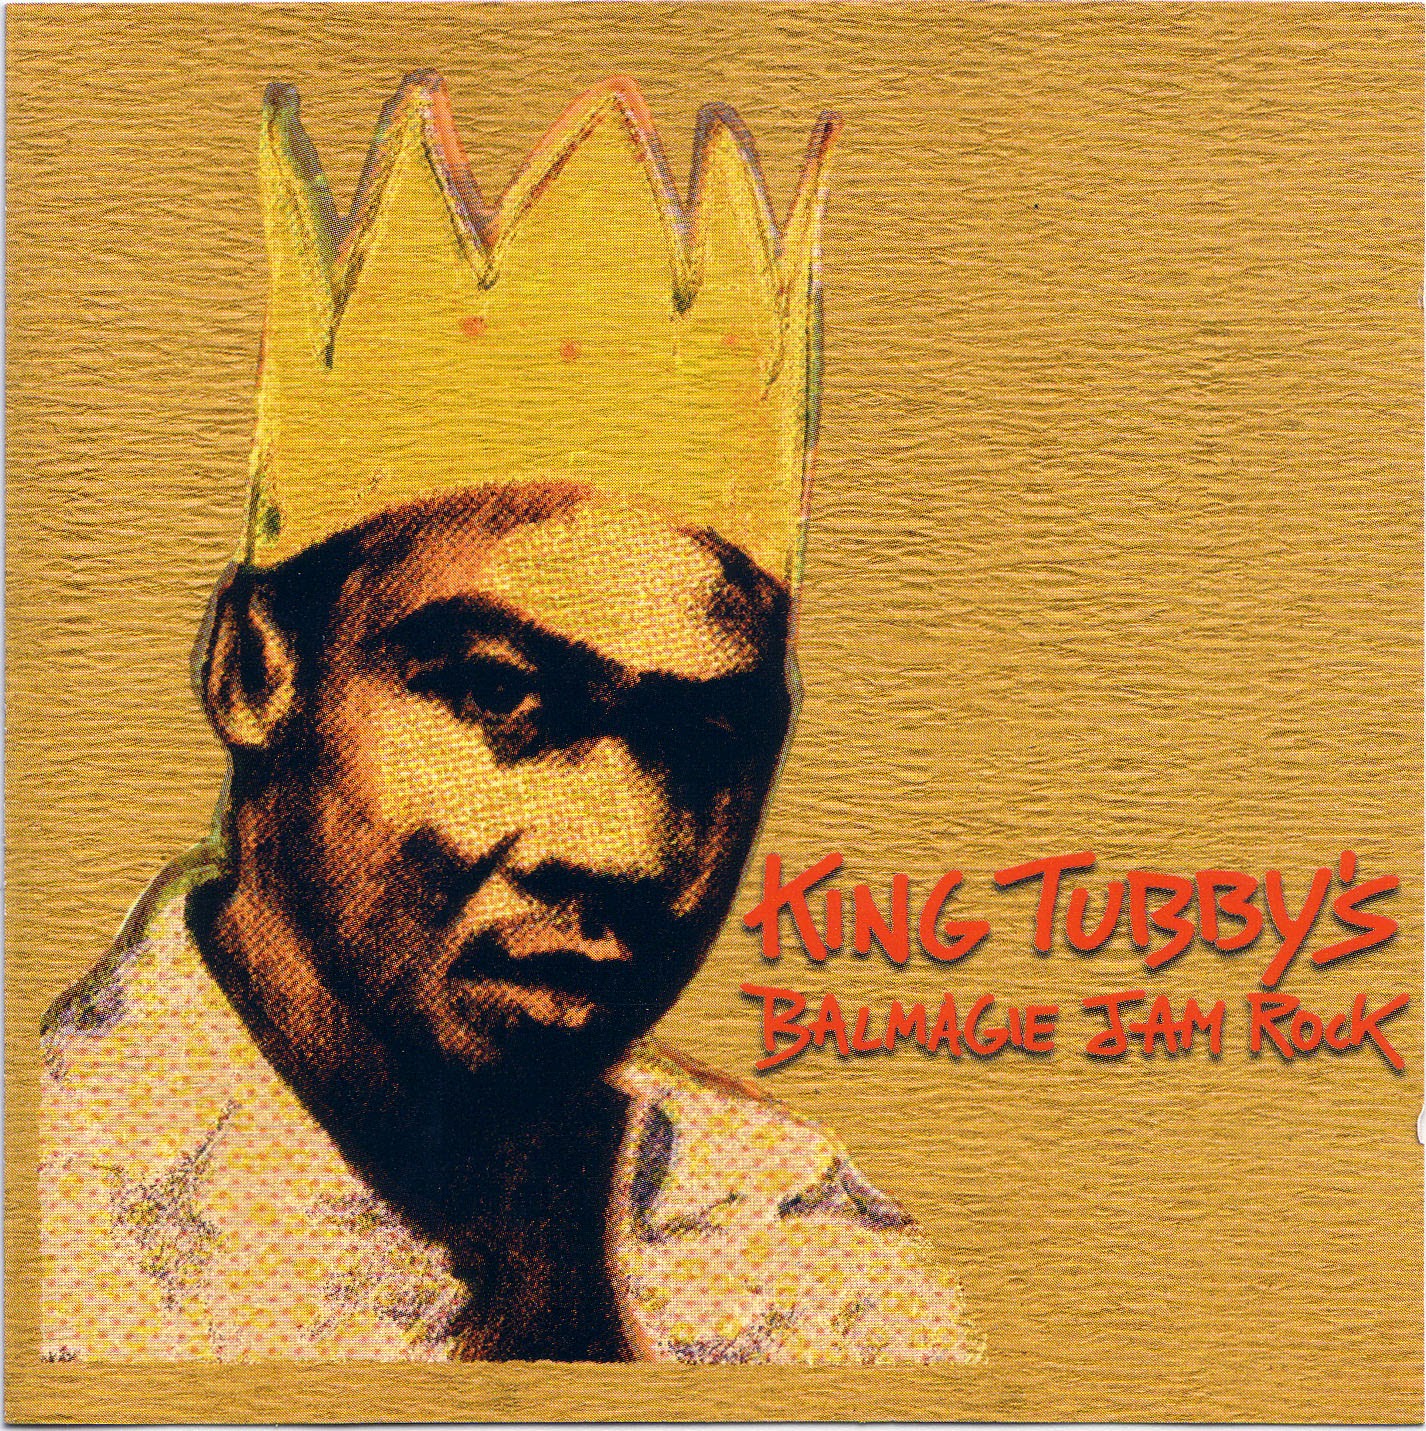 Cut only. King Tubby. 2003 Balmagie Jam Rock. Original King Key Dub King Tubby. King Tubby & friends Dub like Dirt.